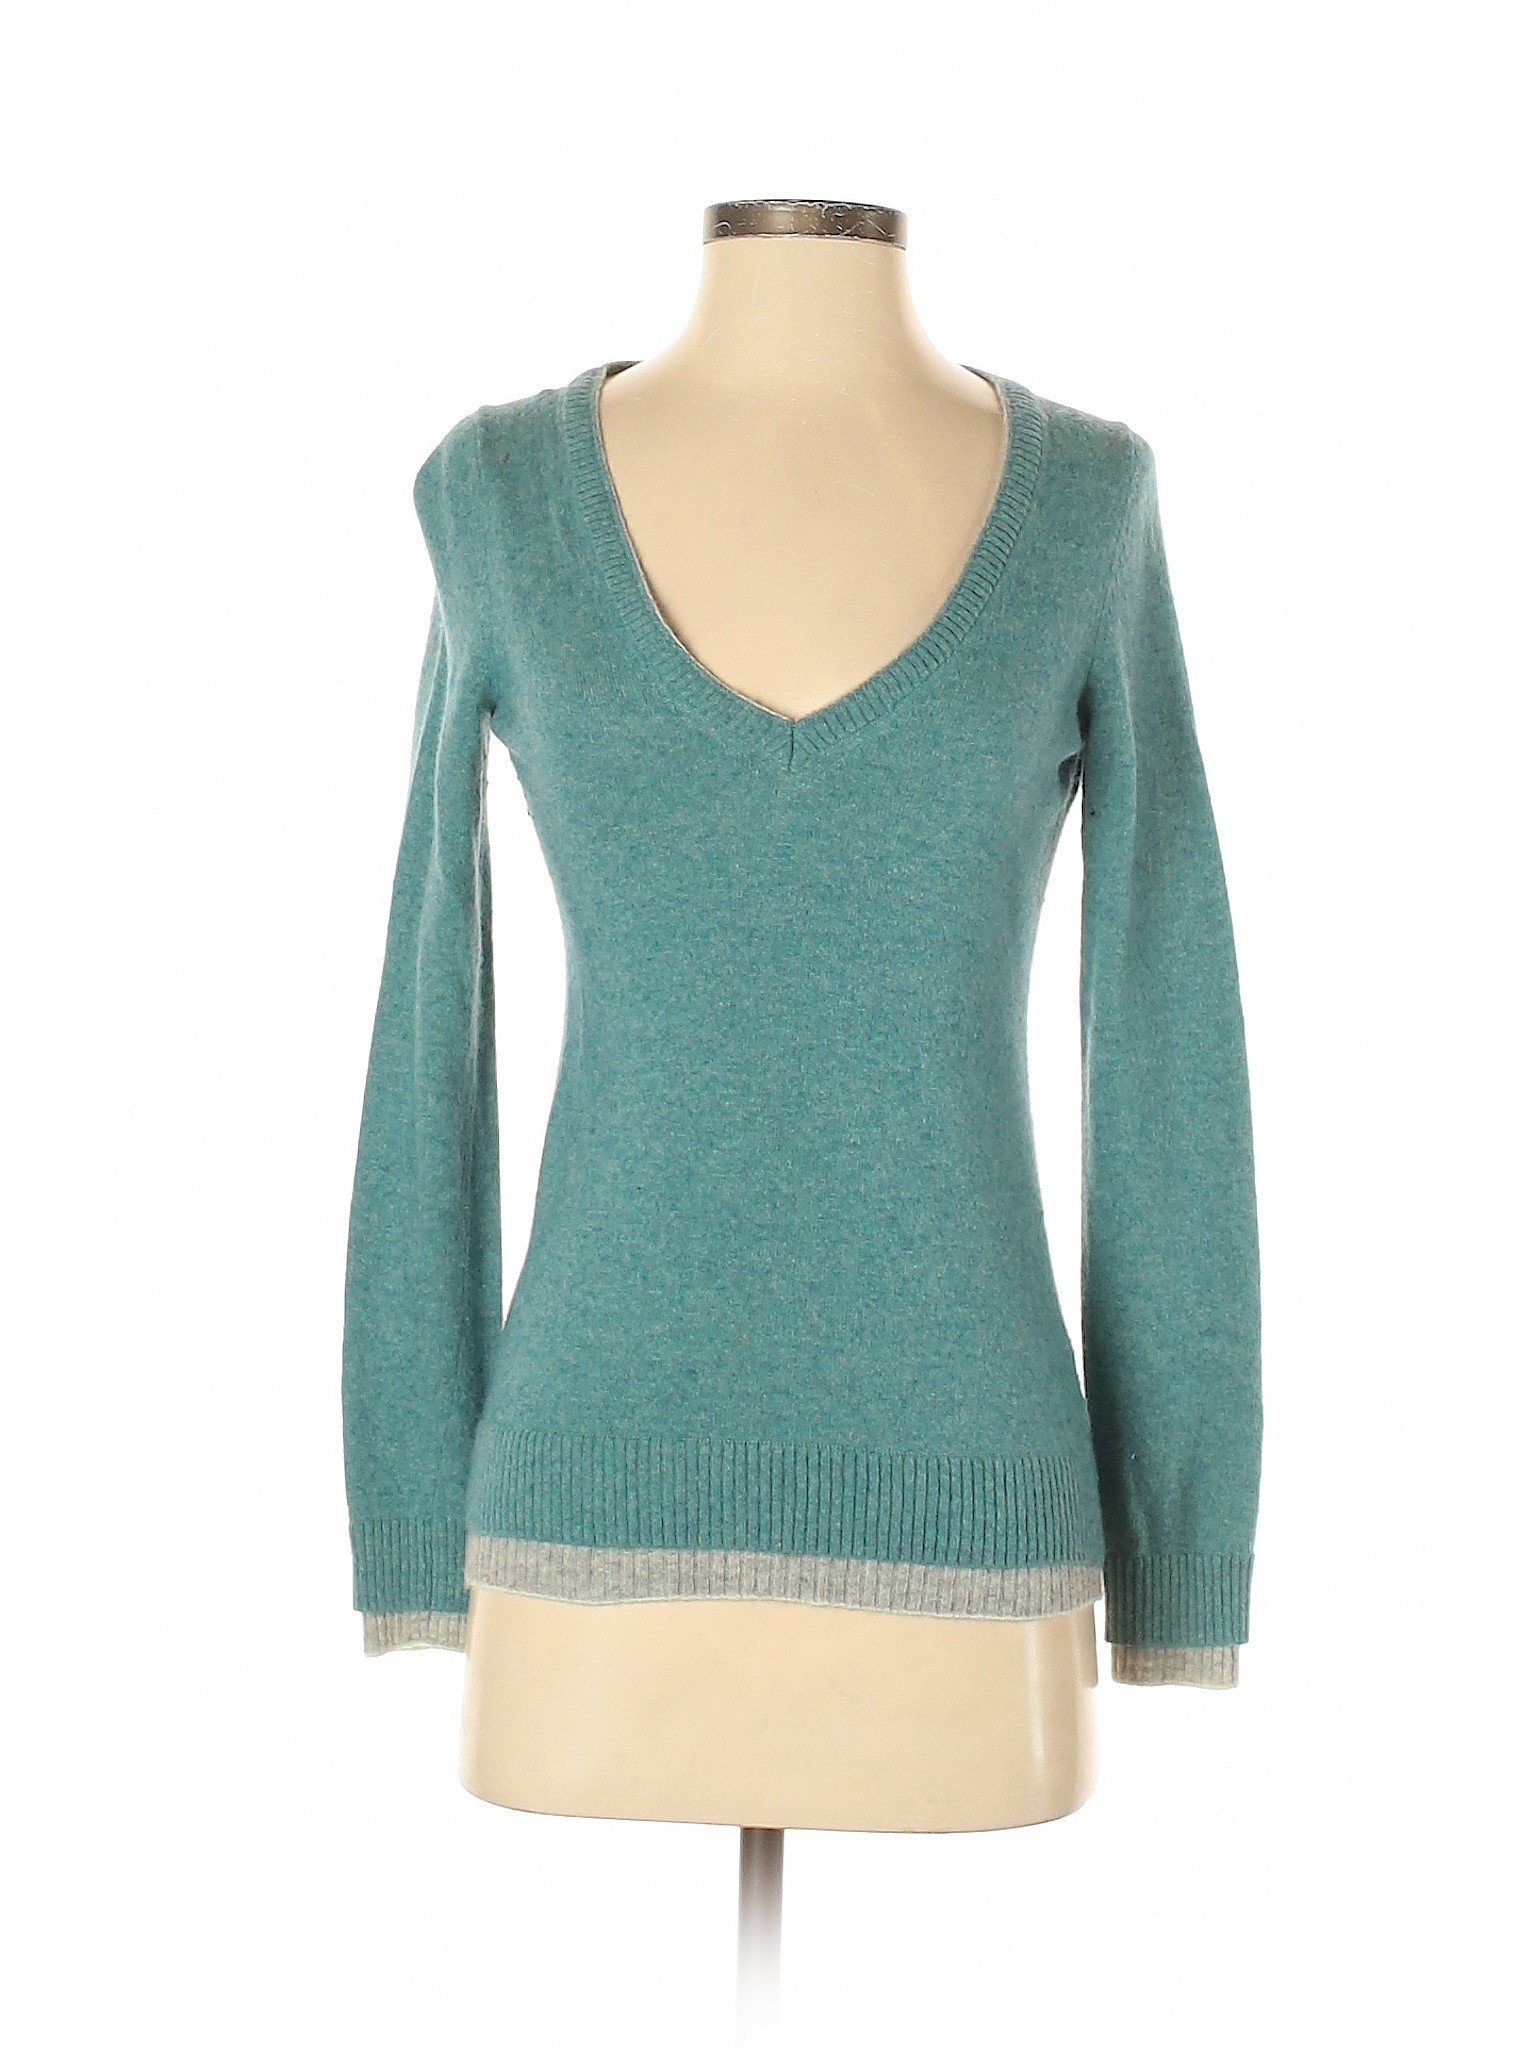 Banana Republic Women Green Pullover Sweater S | eBay